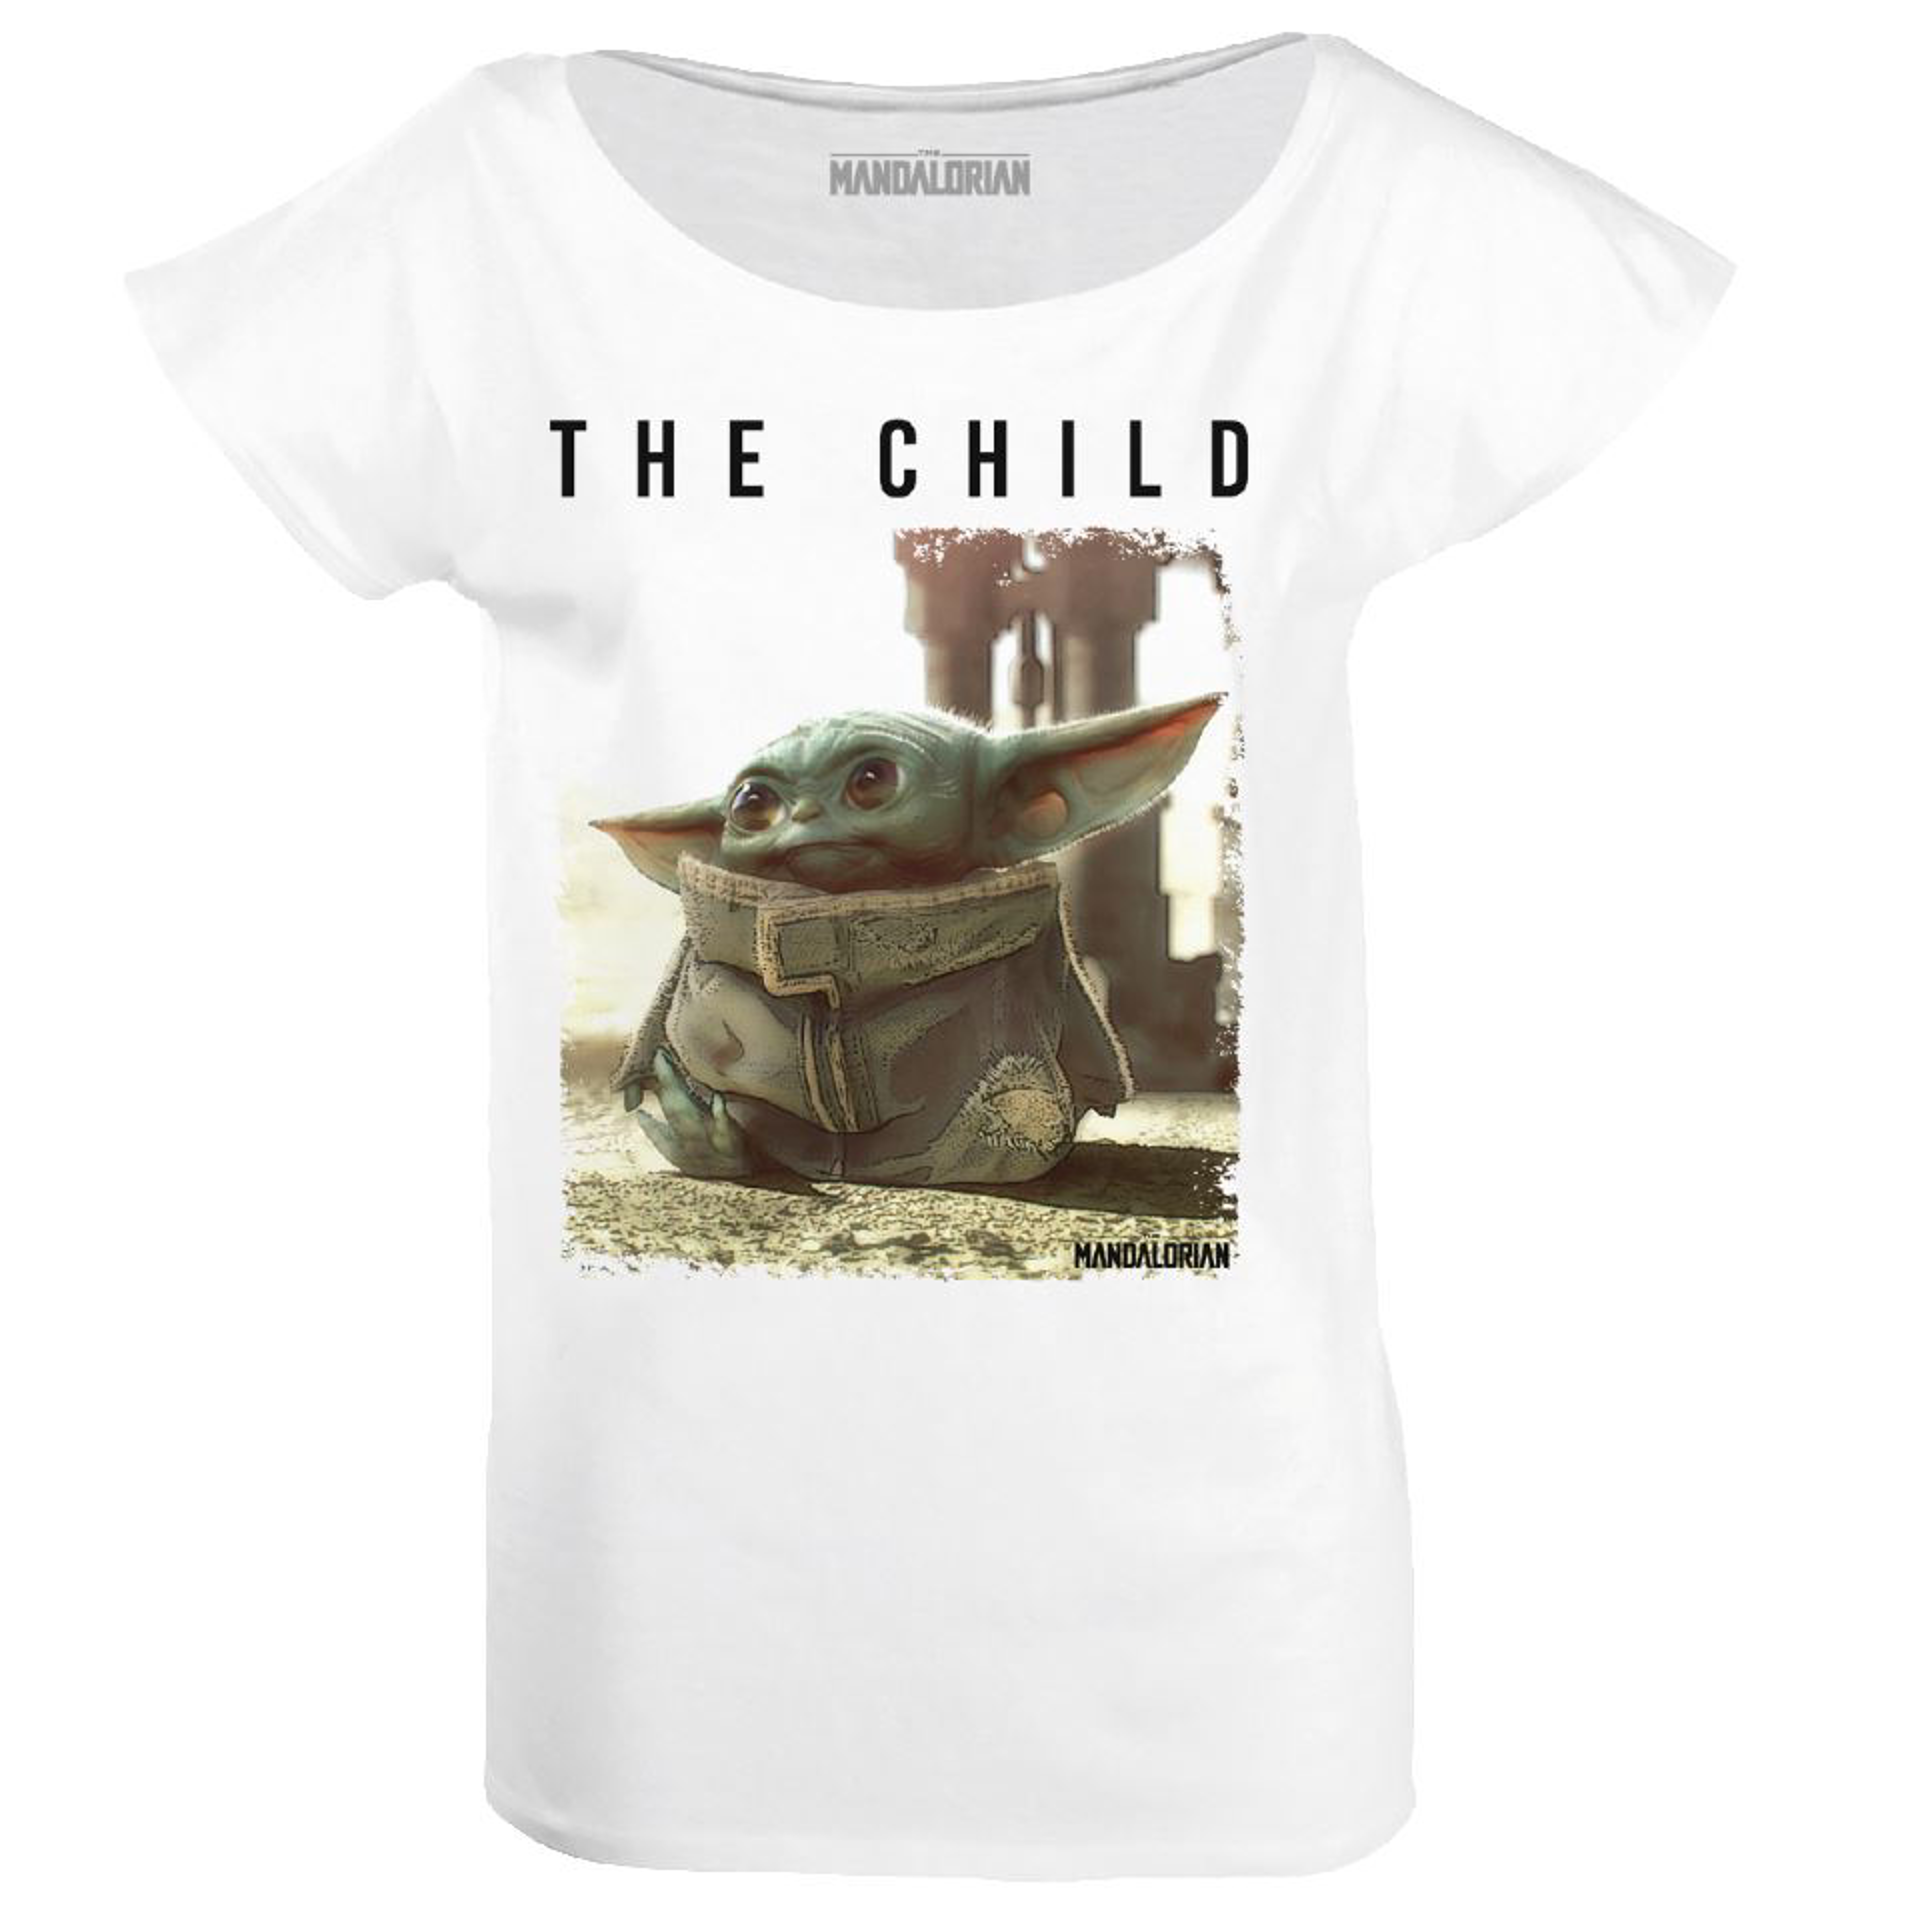 The Mandalorian - T-shirt Blanc Femmes Logo The Child - XL